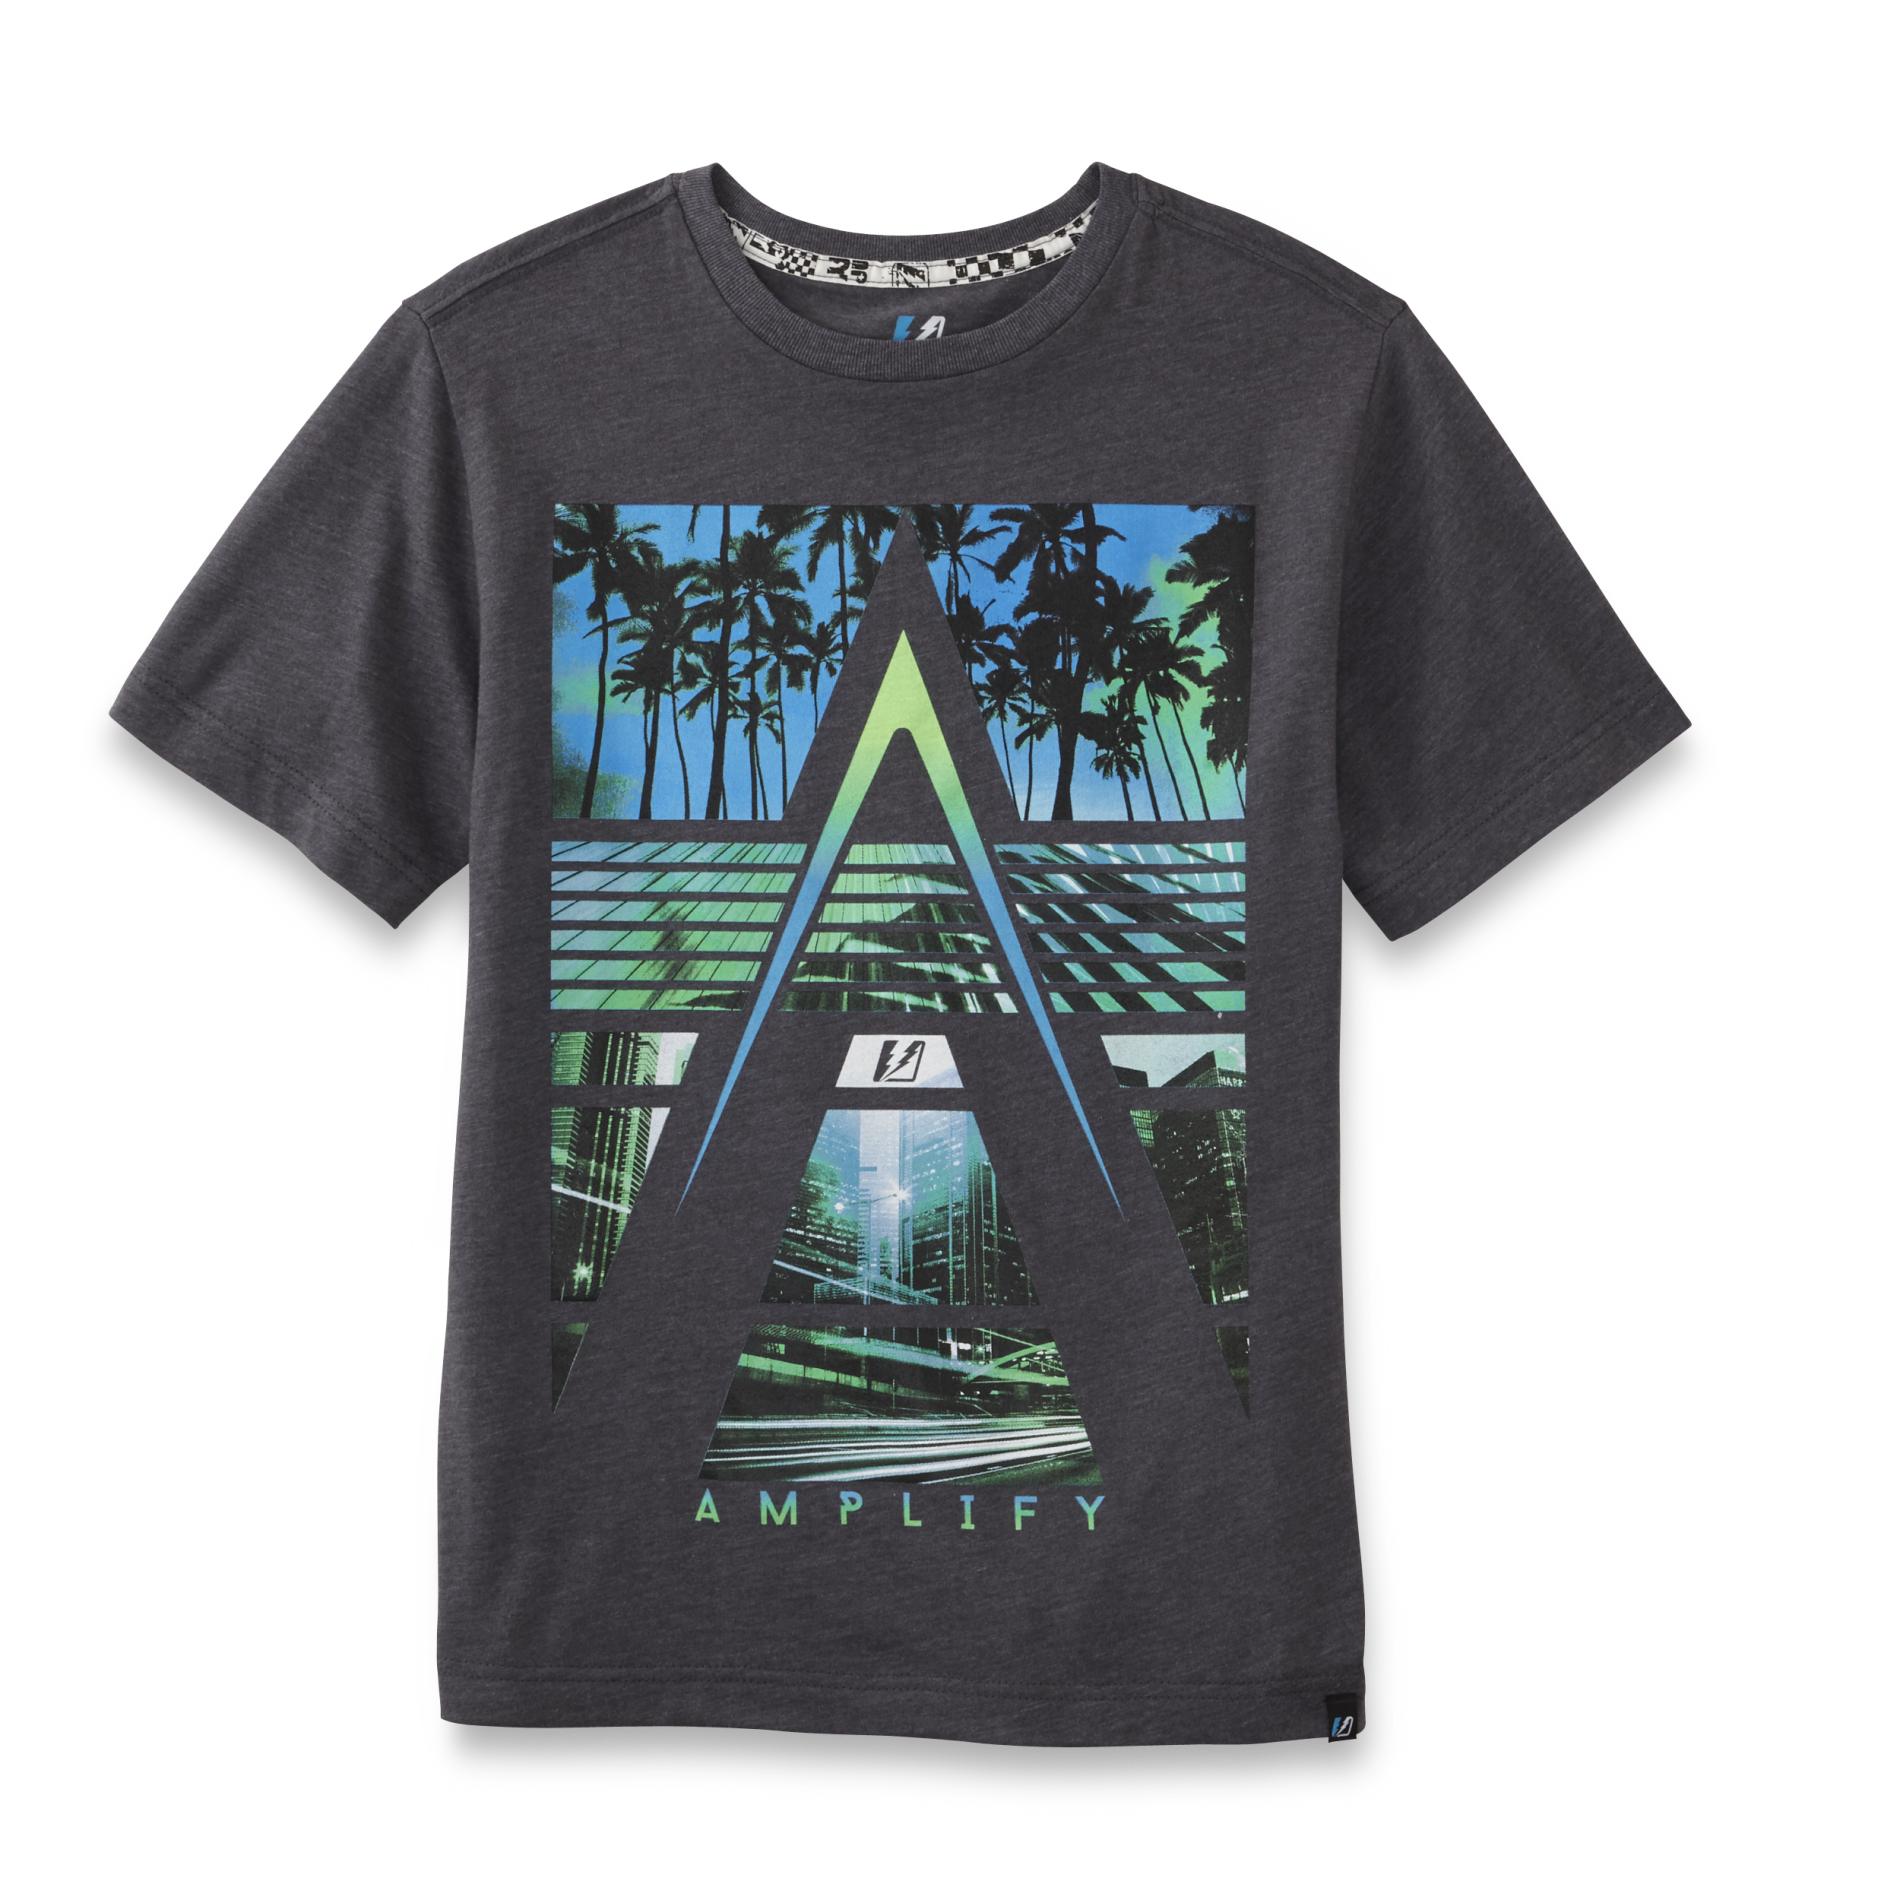 Amplify Boy's Graphic T-Shirt - City